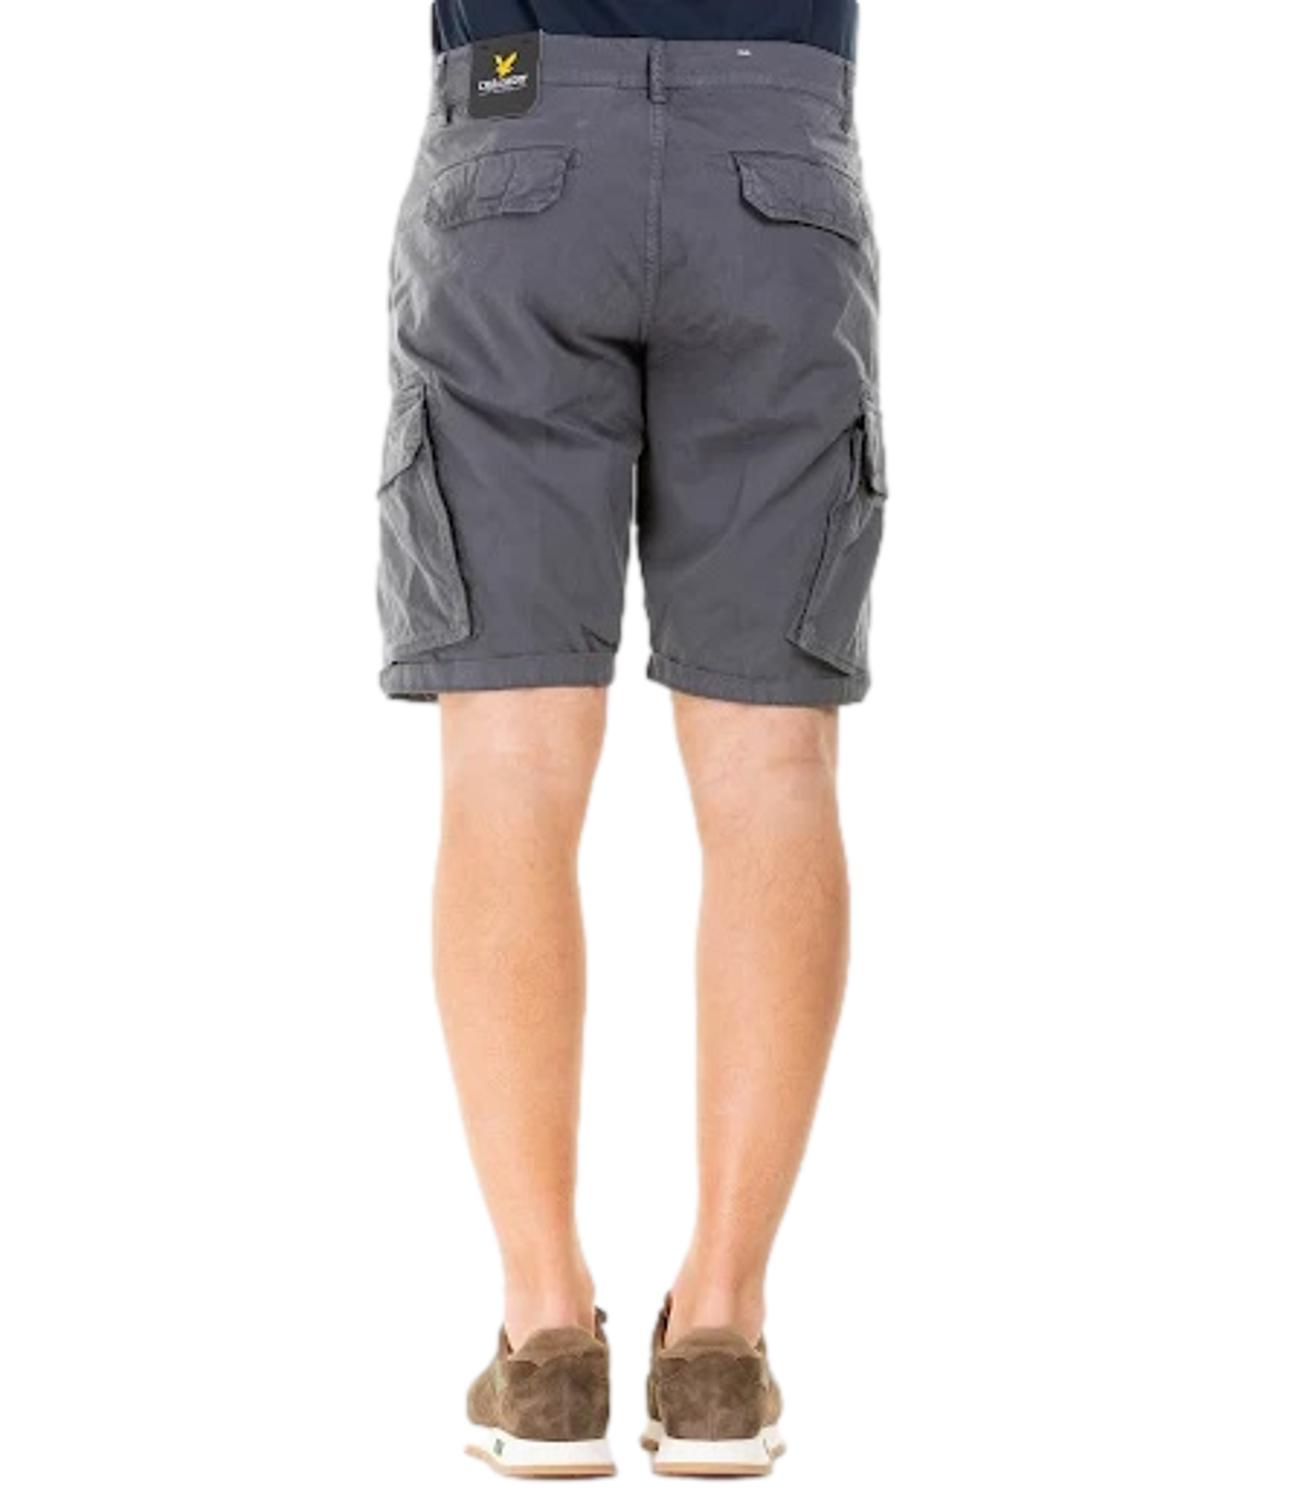 Gray men's cargo shorts